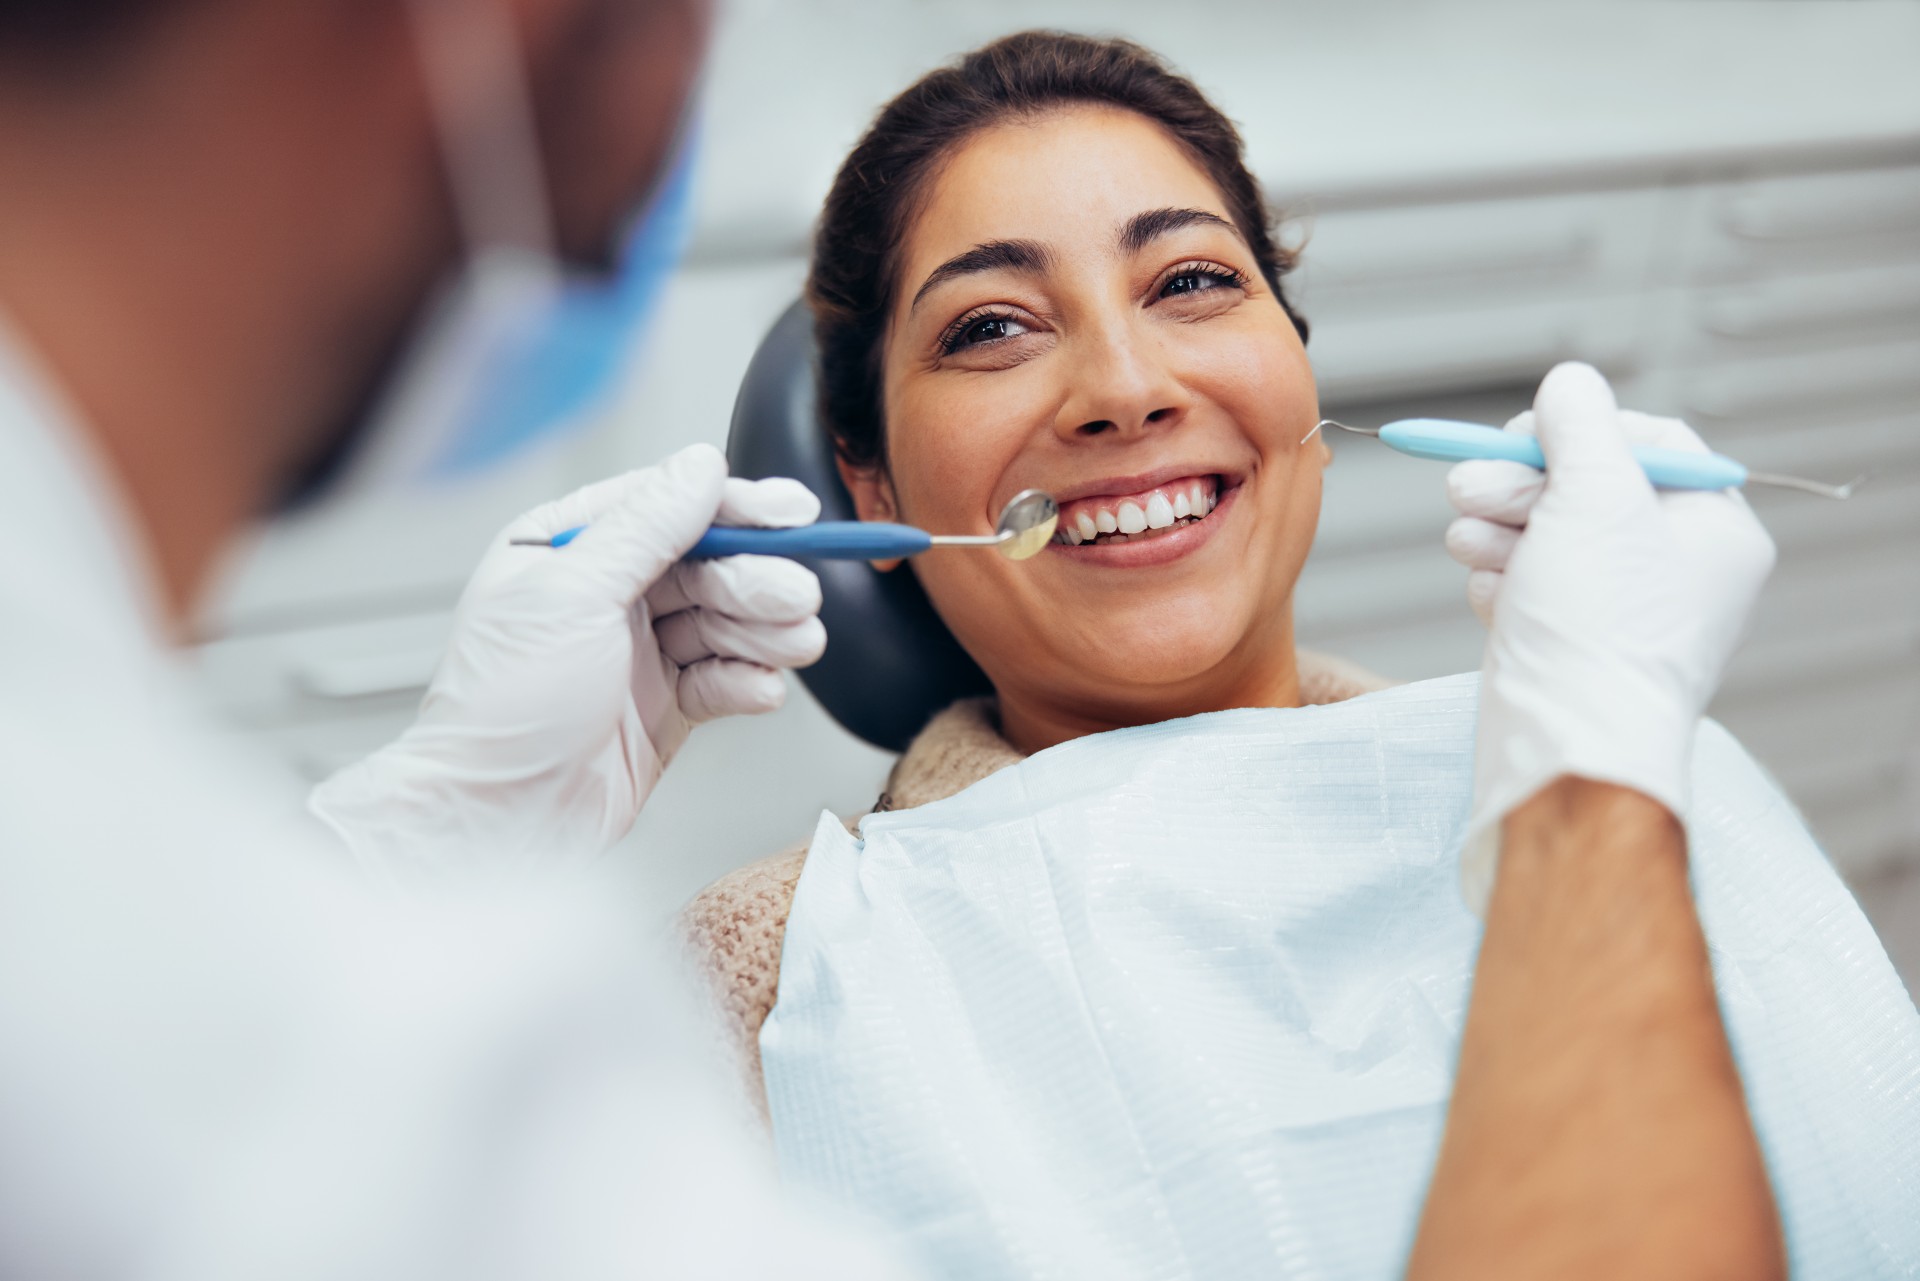 Woman Getting Dental Treatment